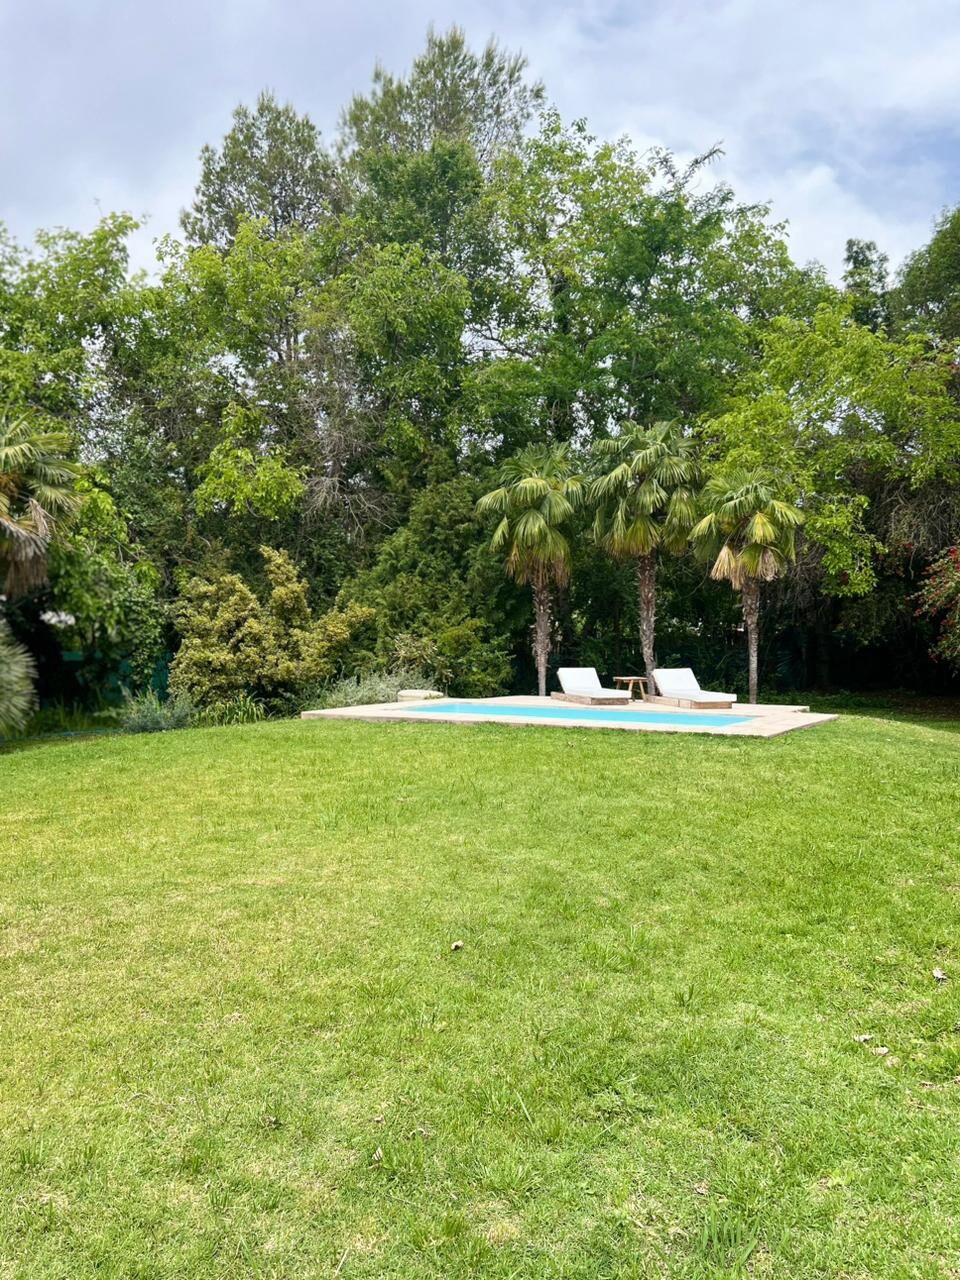 Chacras de Coria带泳池的「Casa Basilia」普通民宅